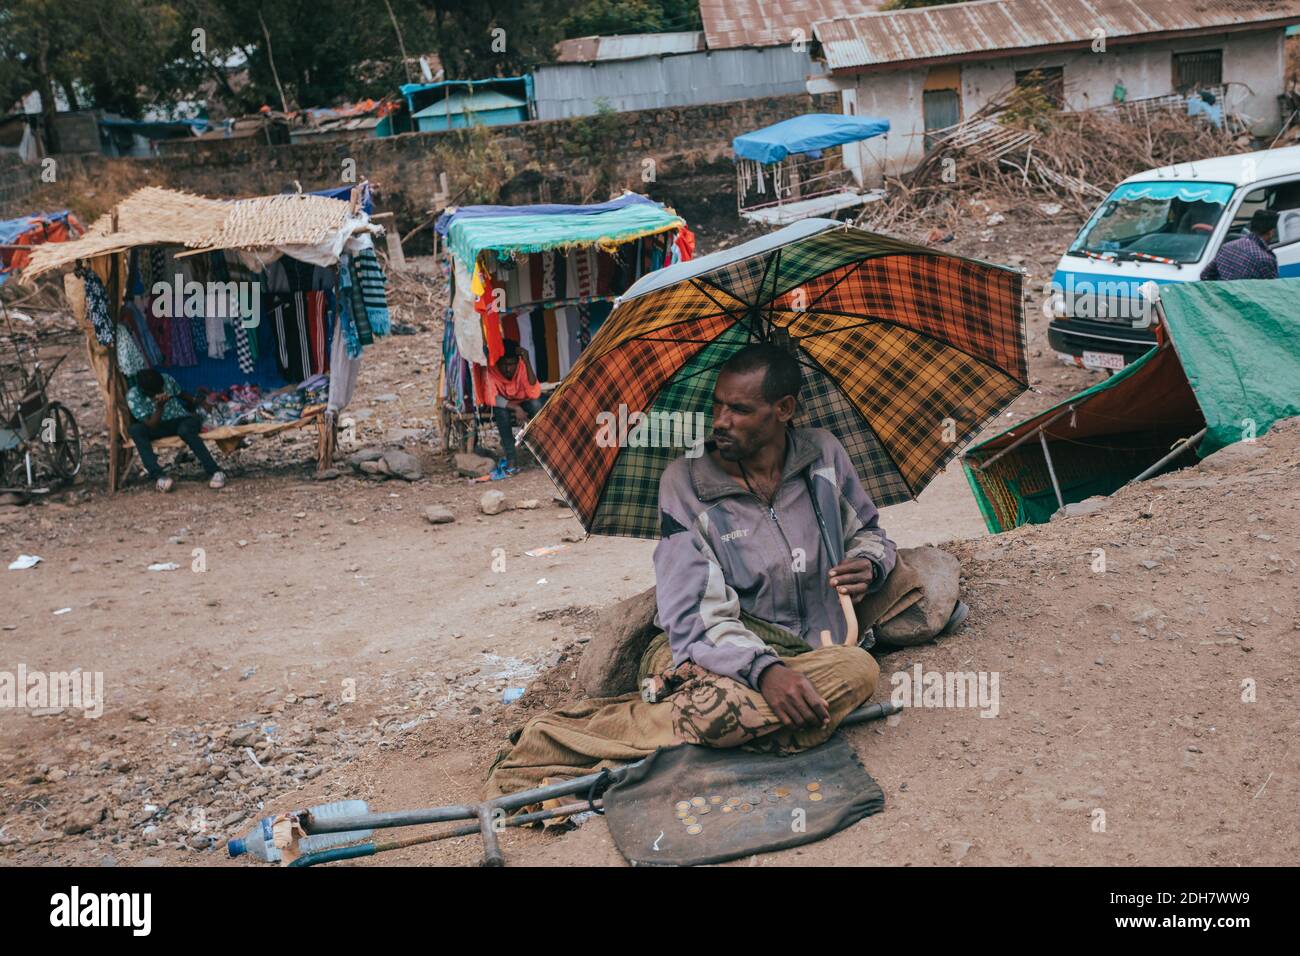 Begging people on the street, Ethiopia Stock Photo